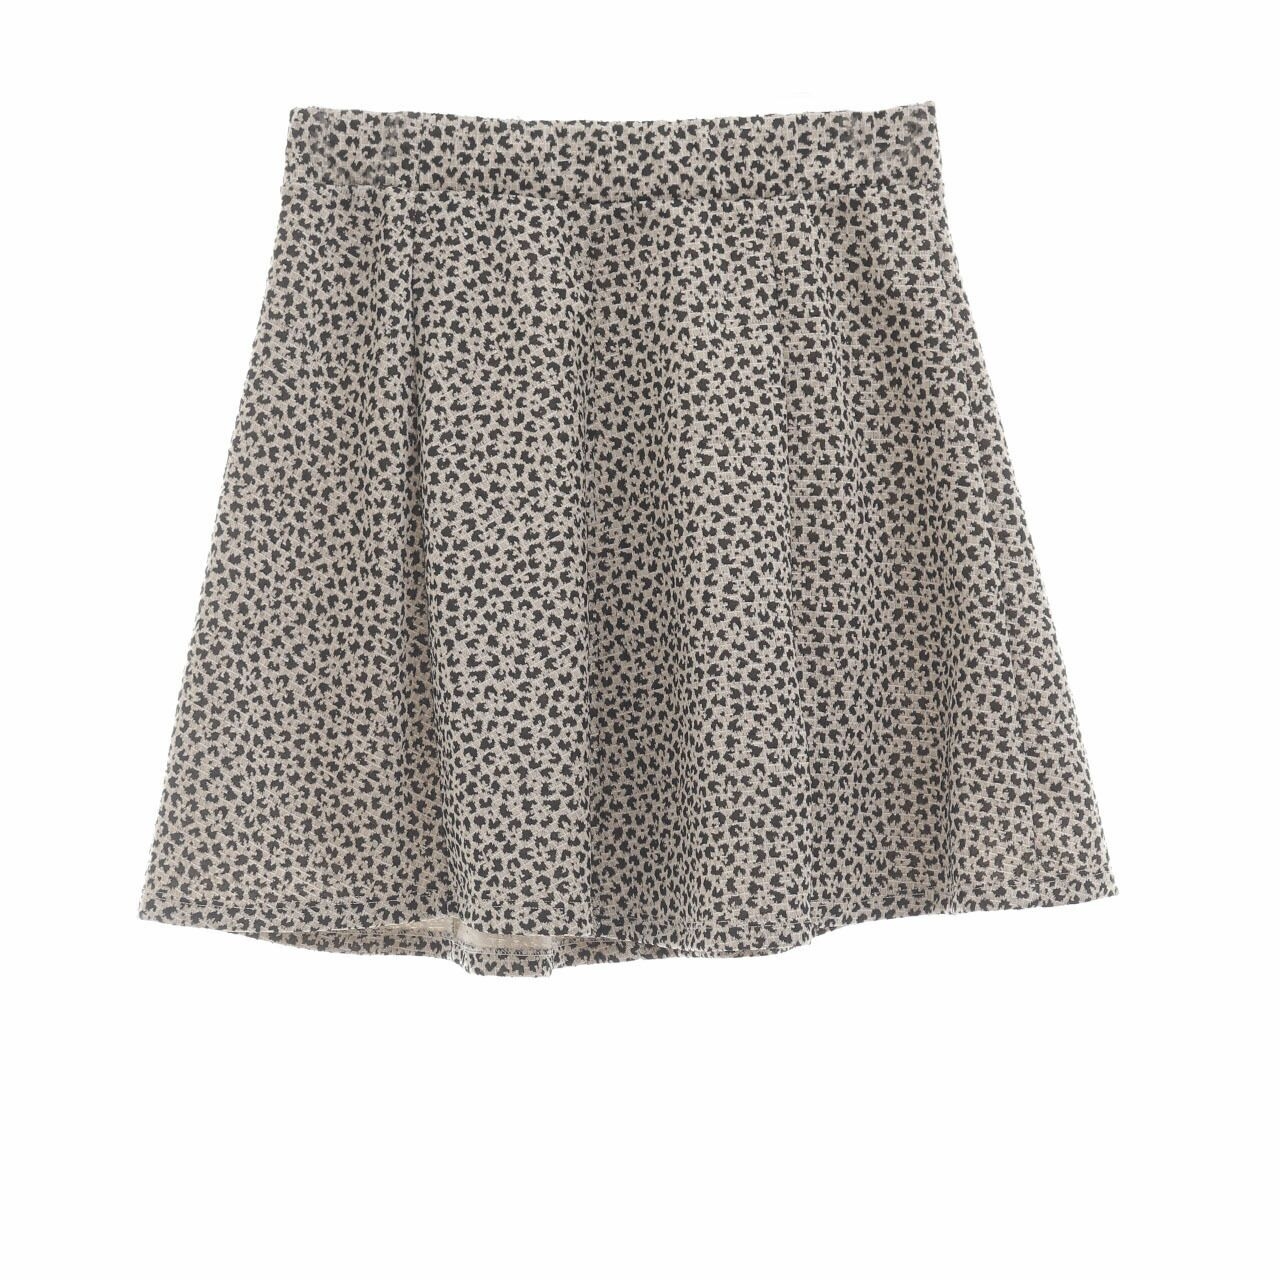 Zara Brown & Black Leopard Mini Skirt